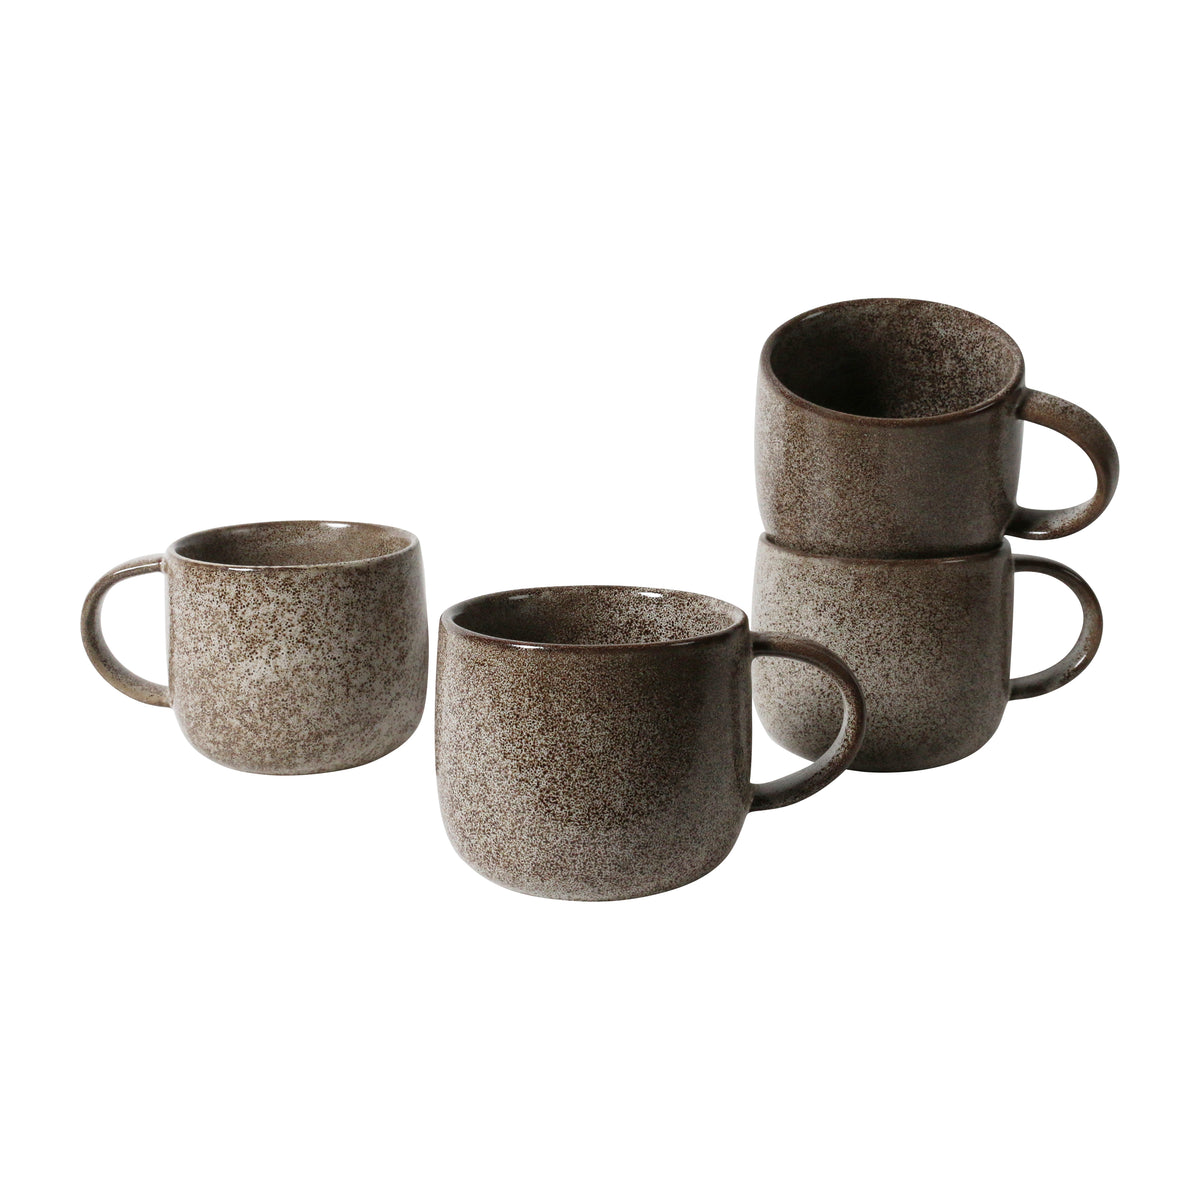 My Mugs / Basalt